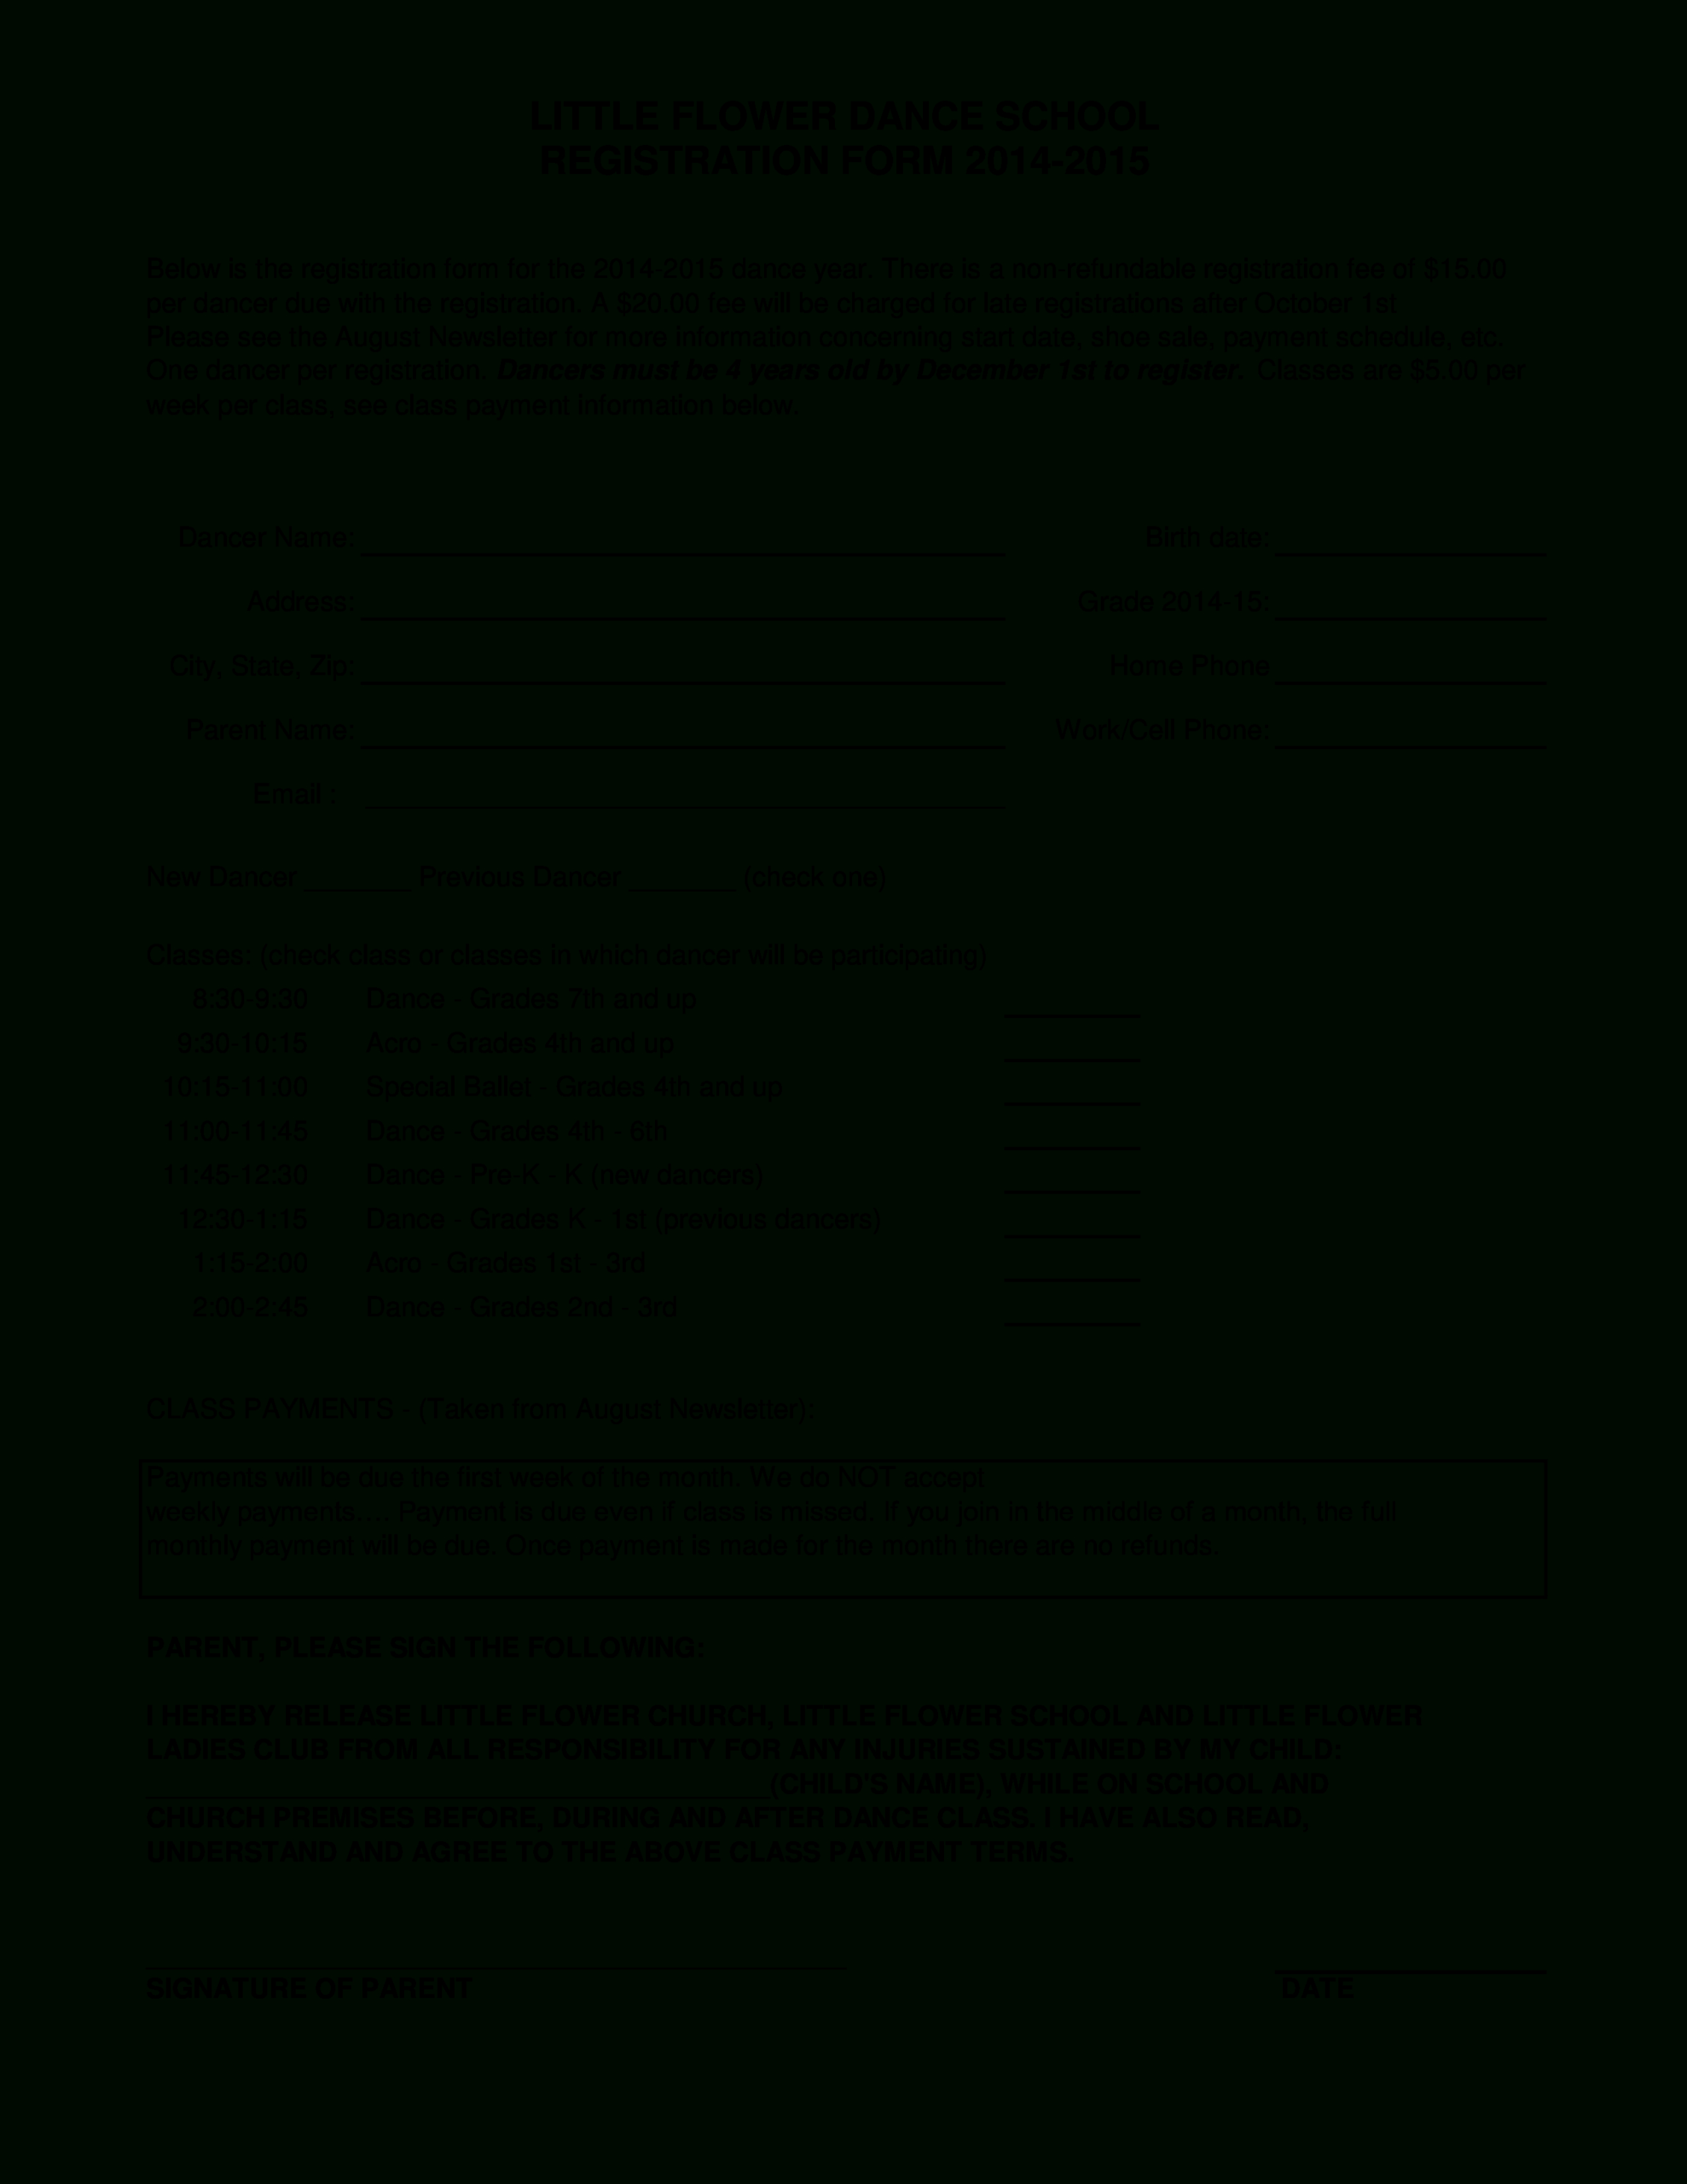 Dance School Registration Form | Templates At Throughout School Registration Form Template Word